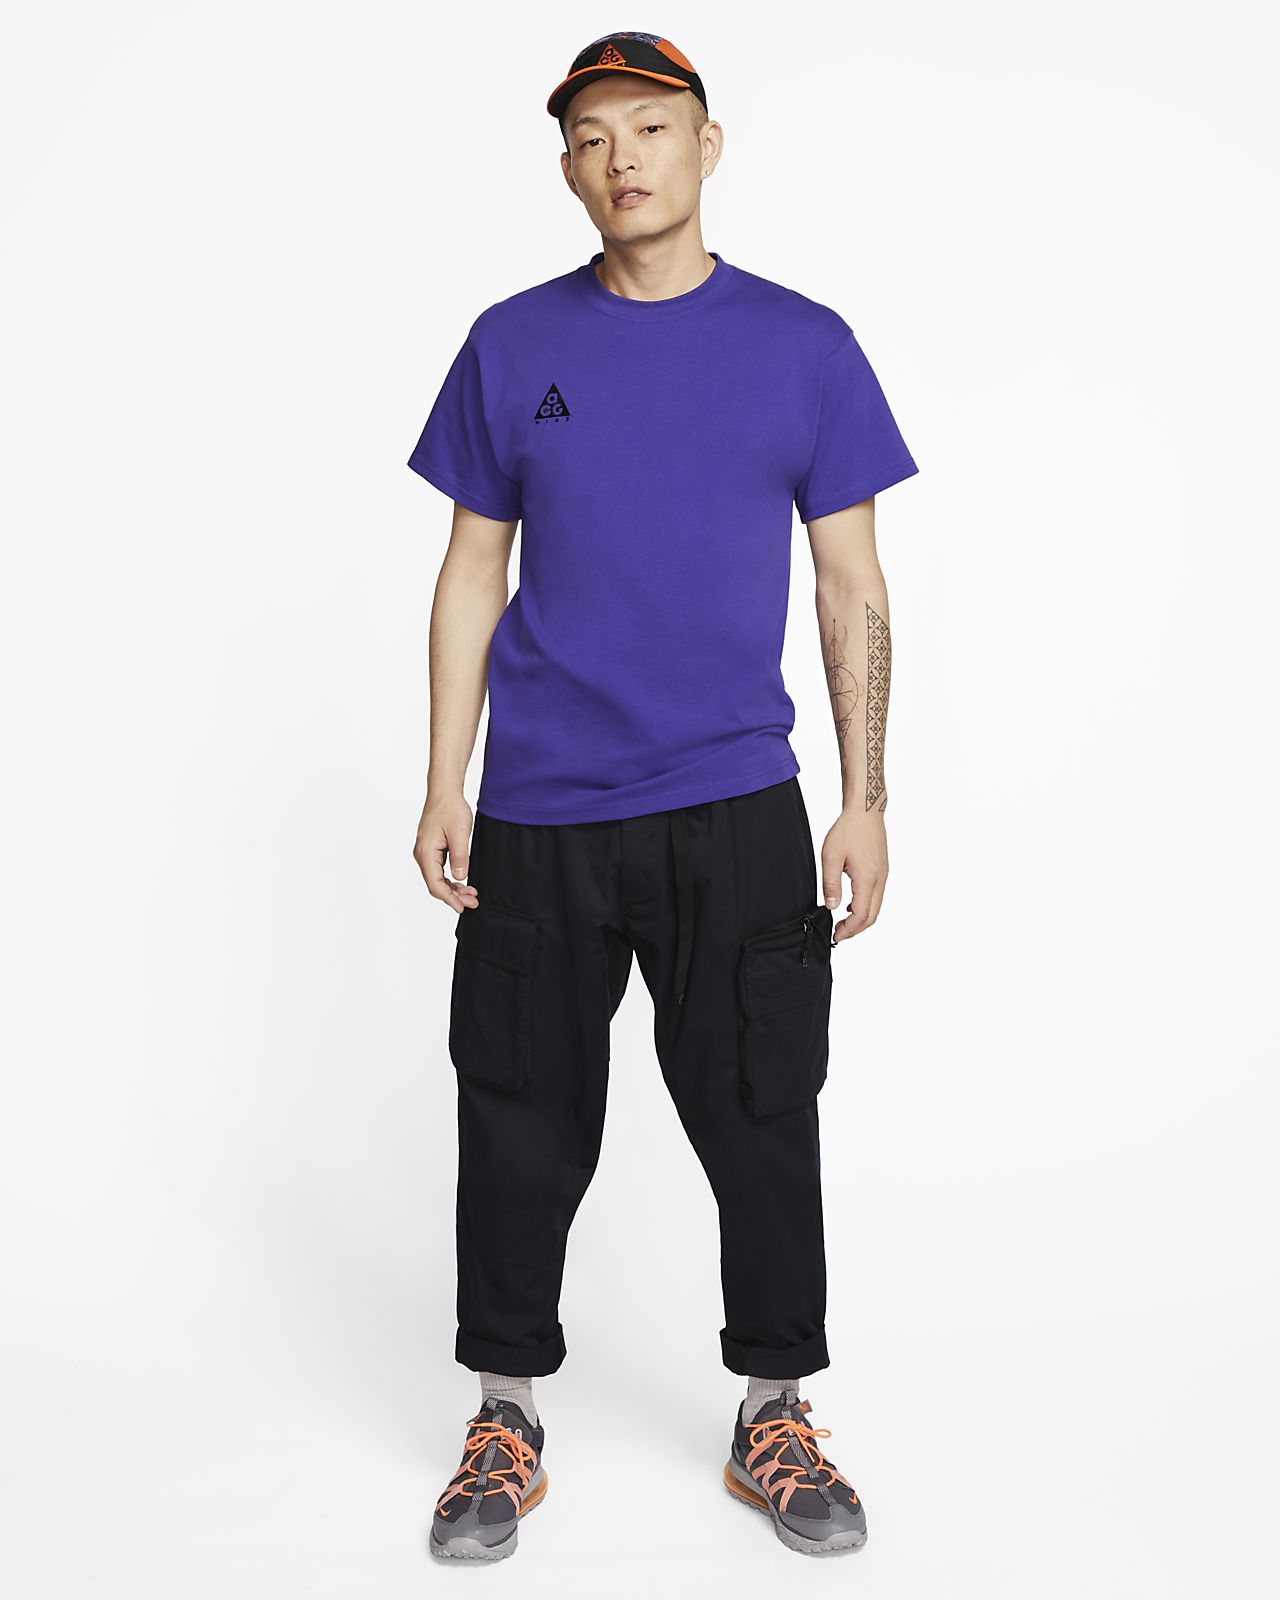 Nike公式 ナイキ Acg メンズ ロゴ Tシャツ オンラインストア 通販サイト